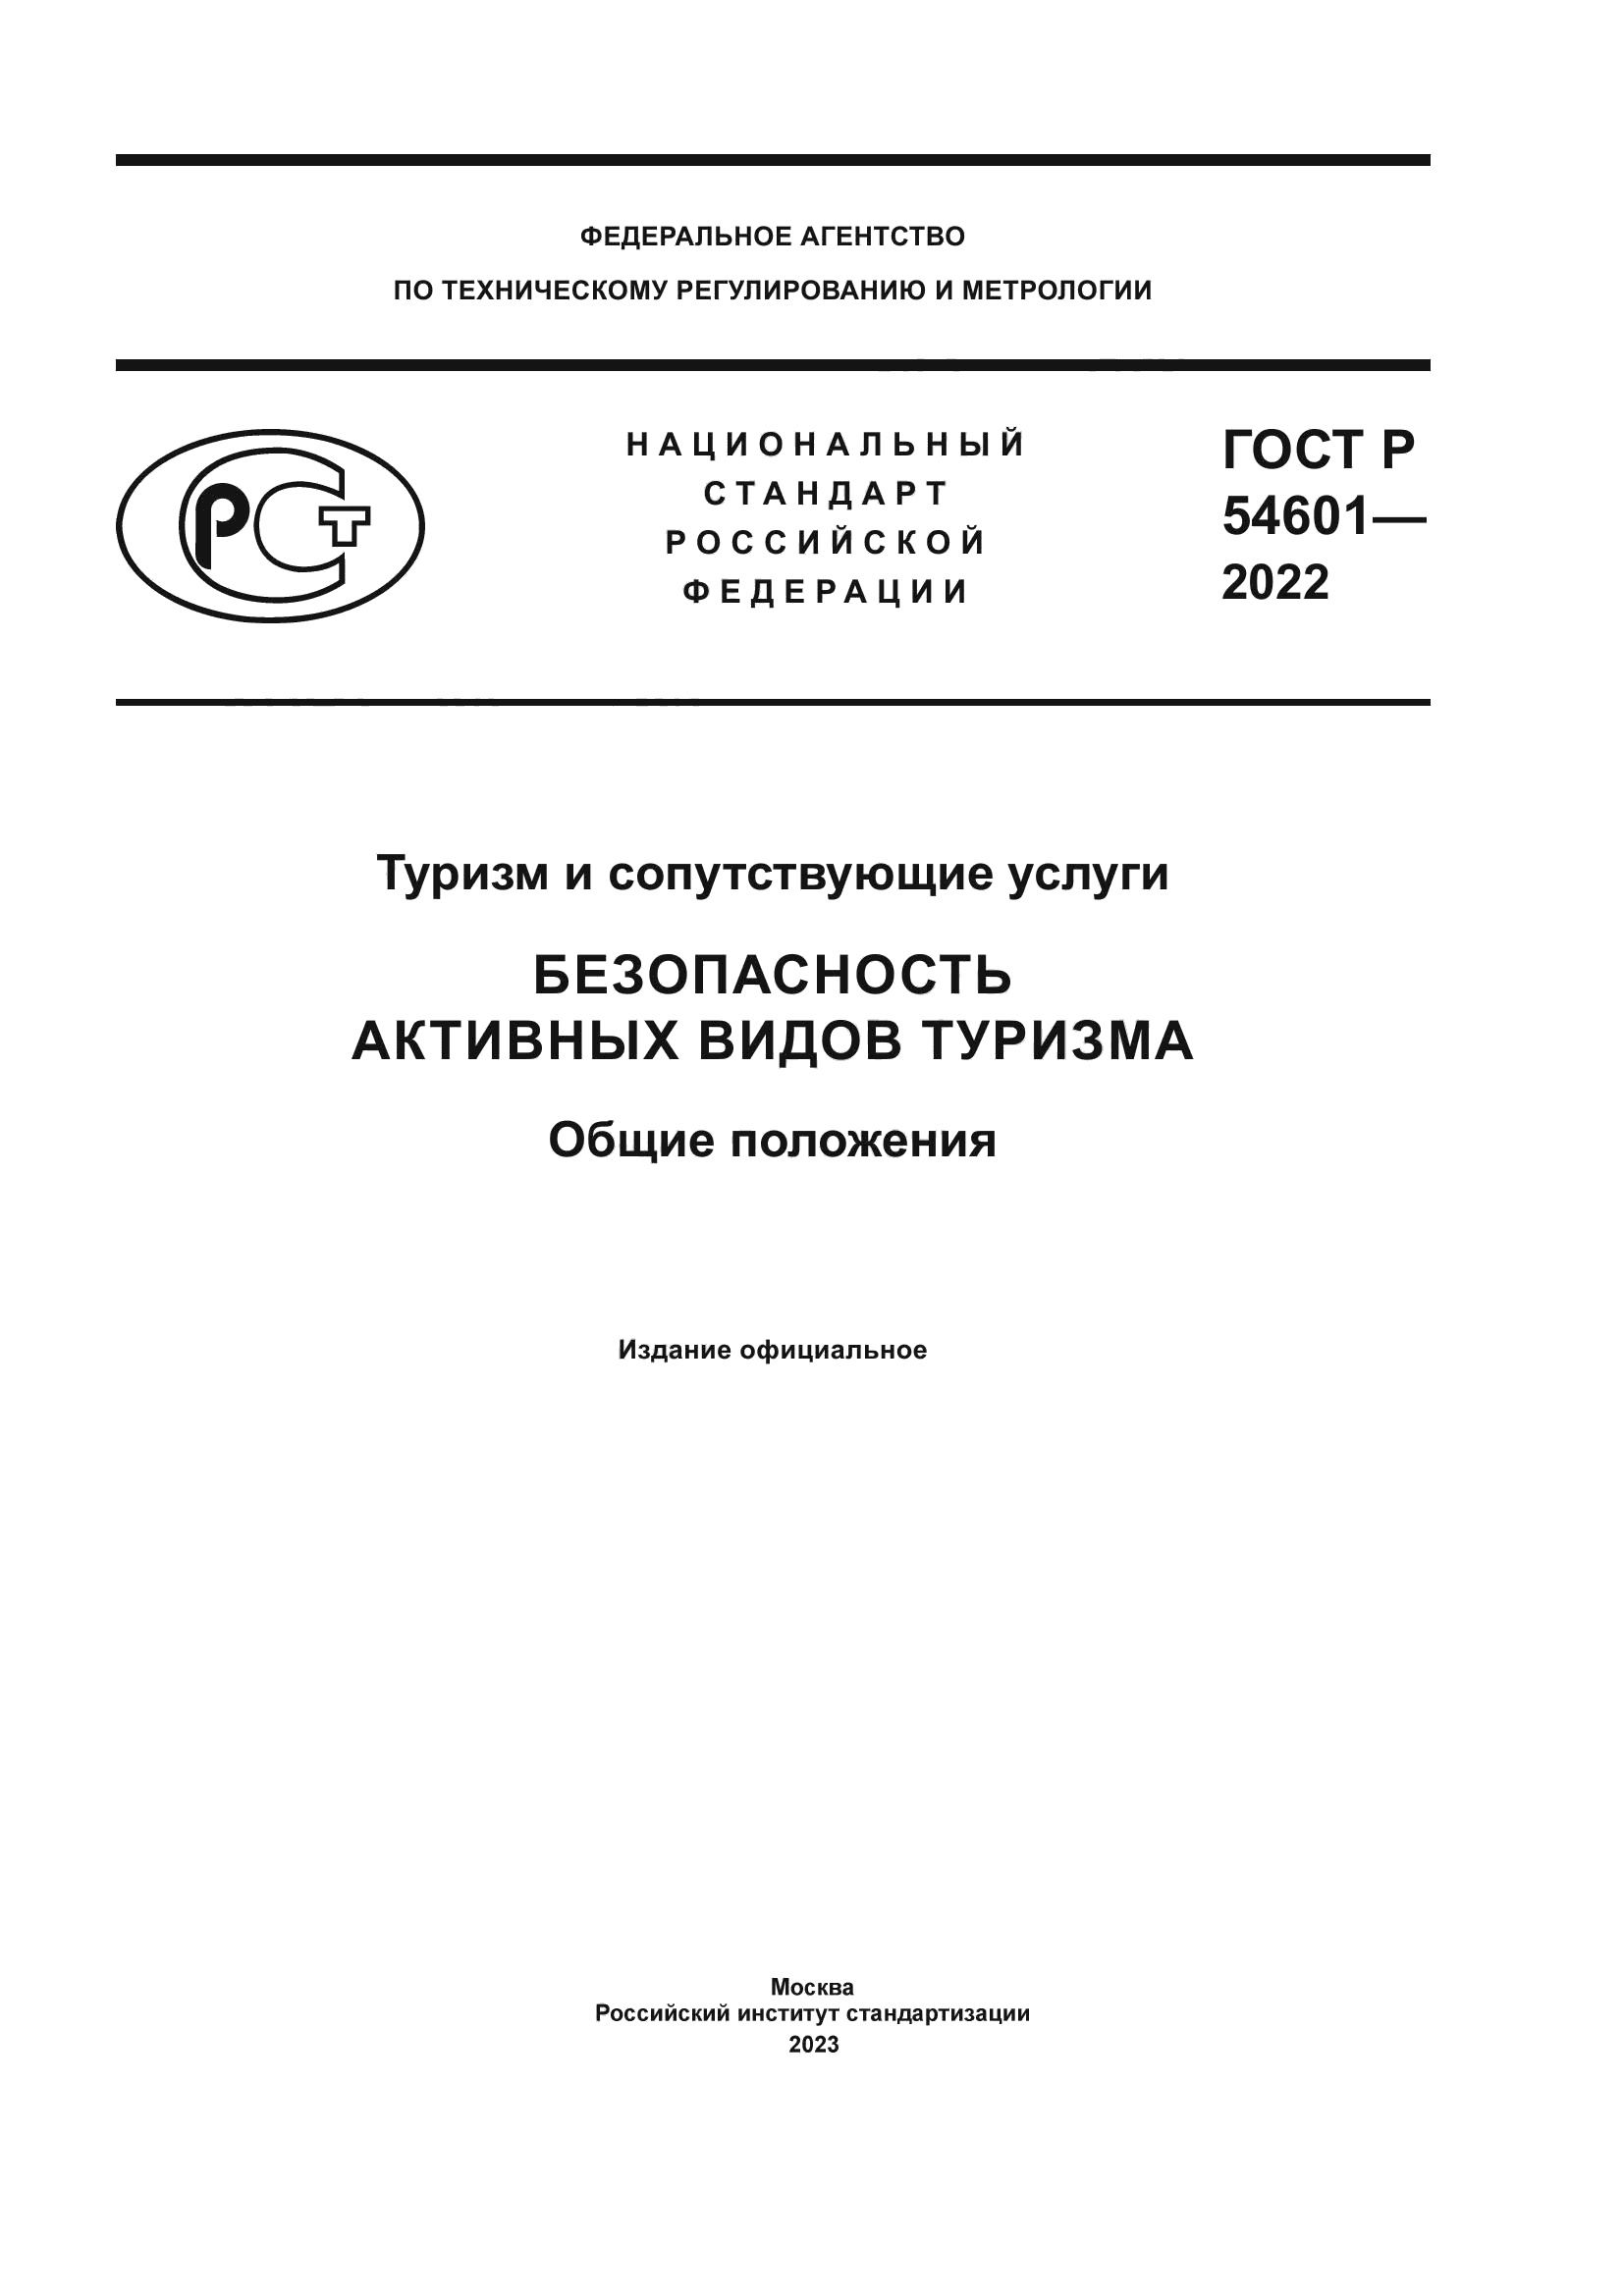 ГОСТ Р 54601-2022